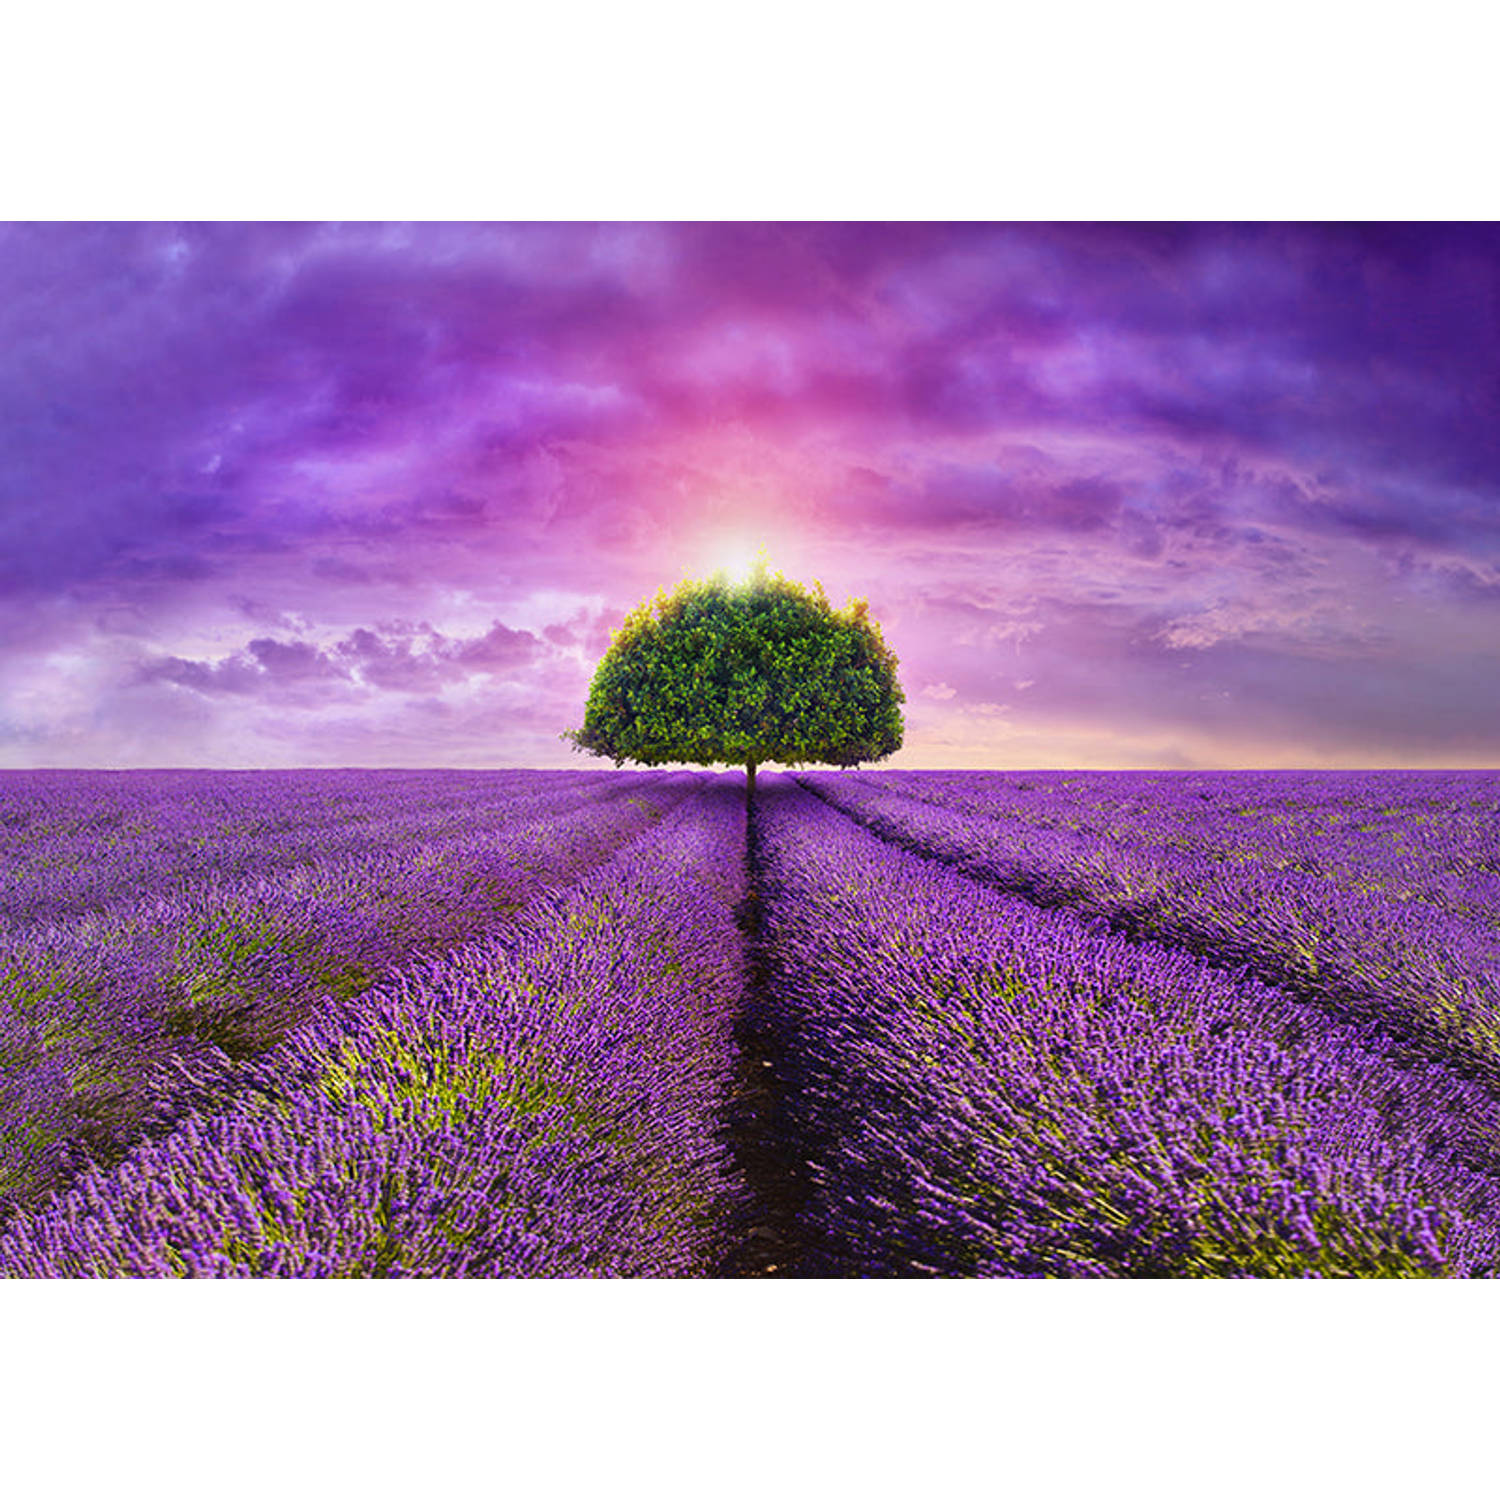 Inductiebeschermer - Lavendel veld - 75x52 cm